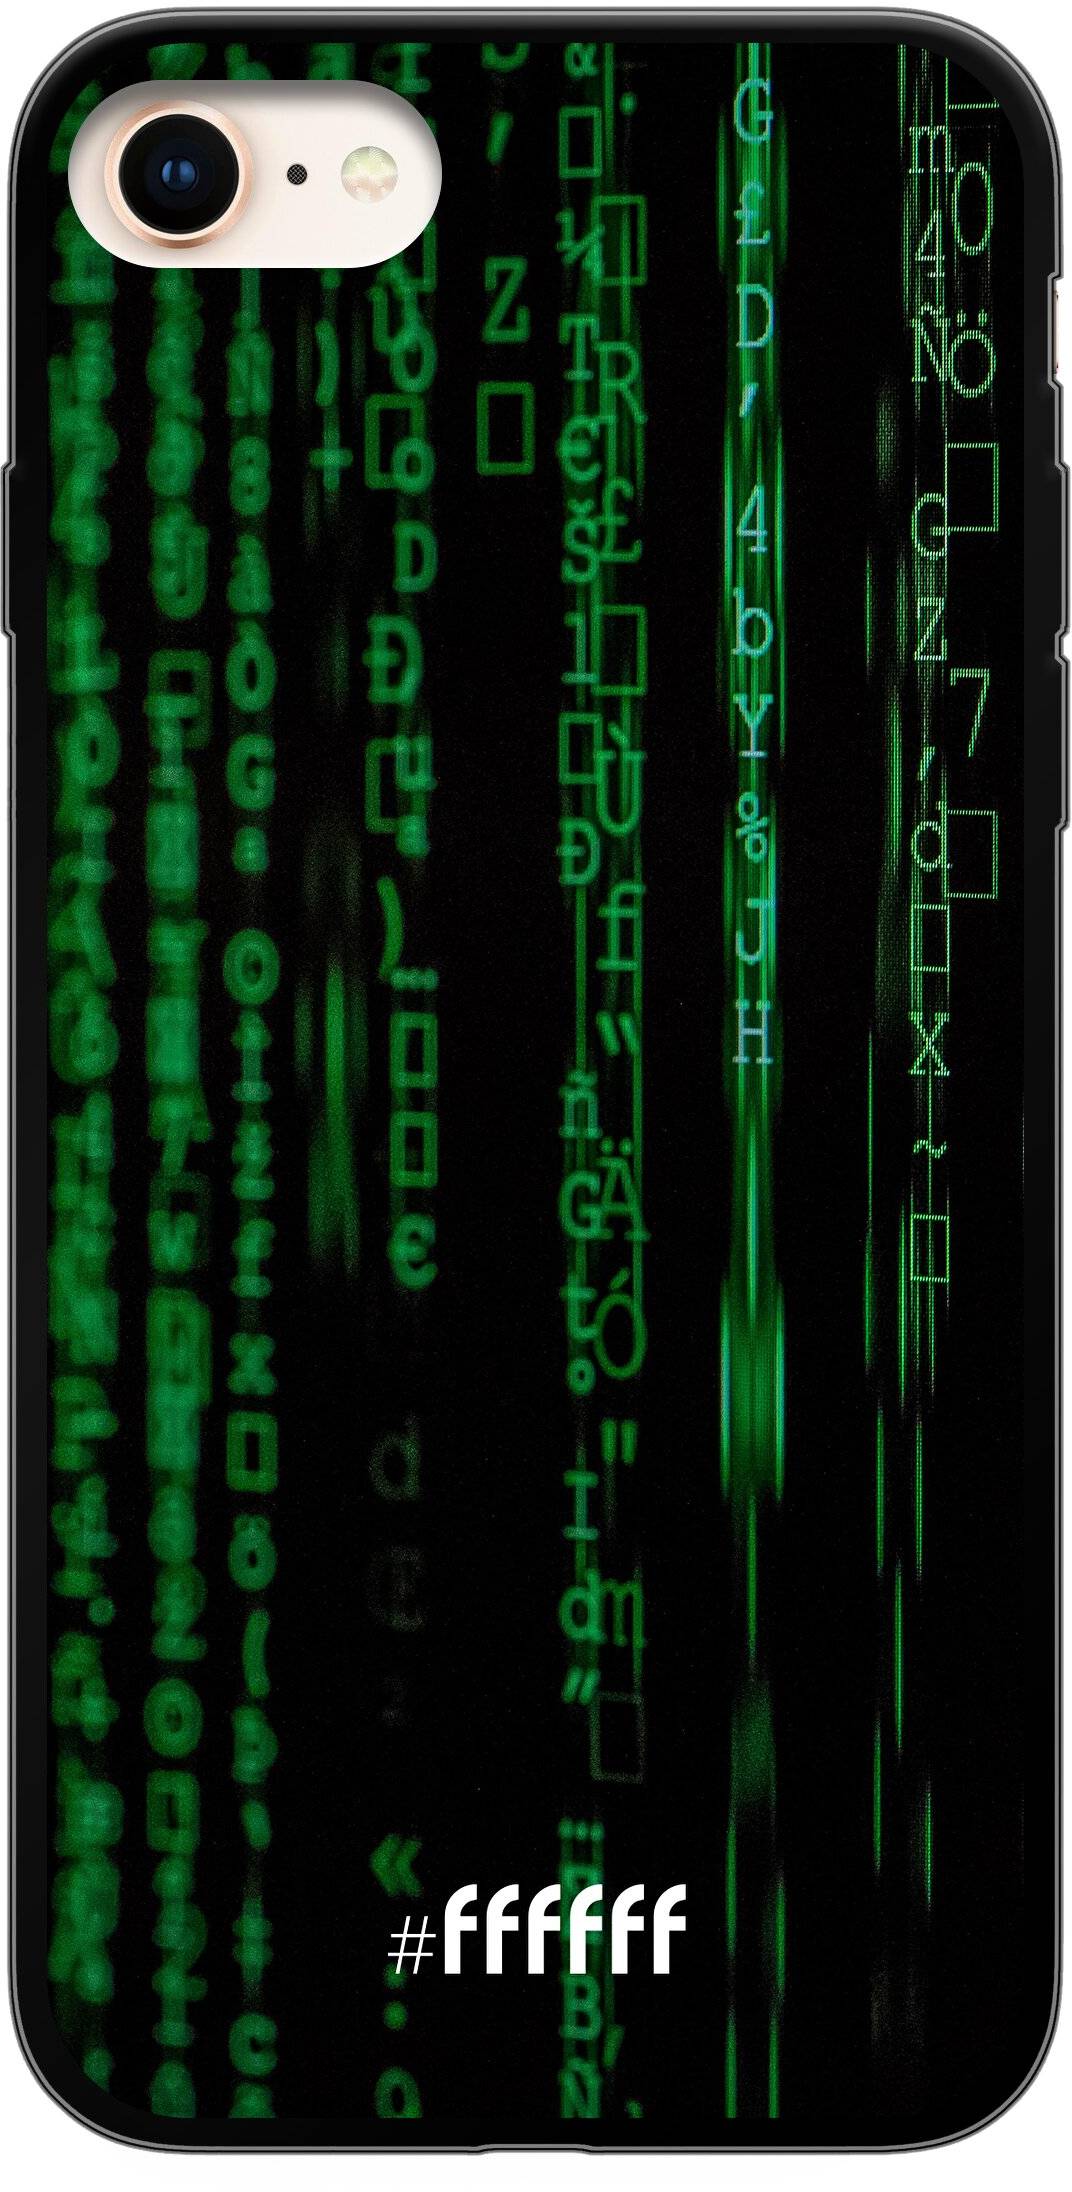 Hacking The Matrix iPhone 7